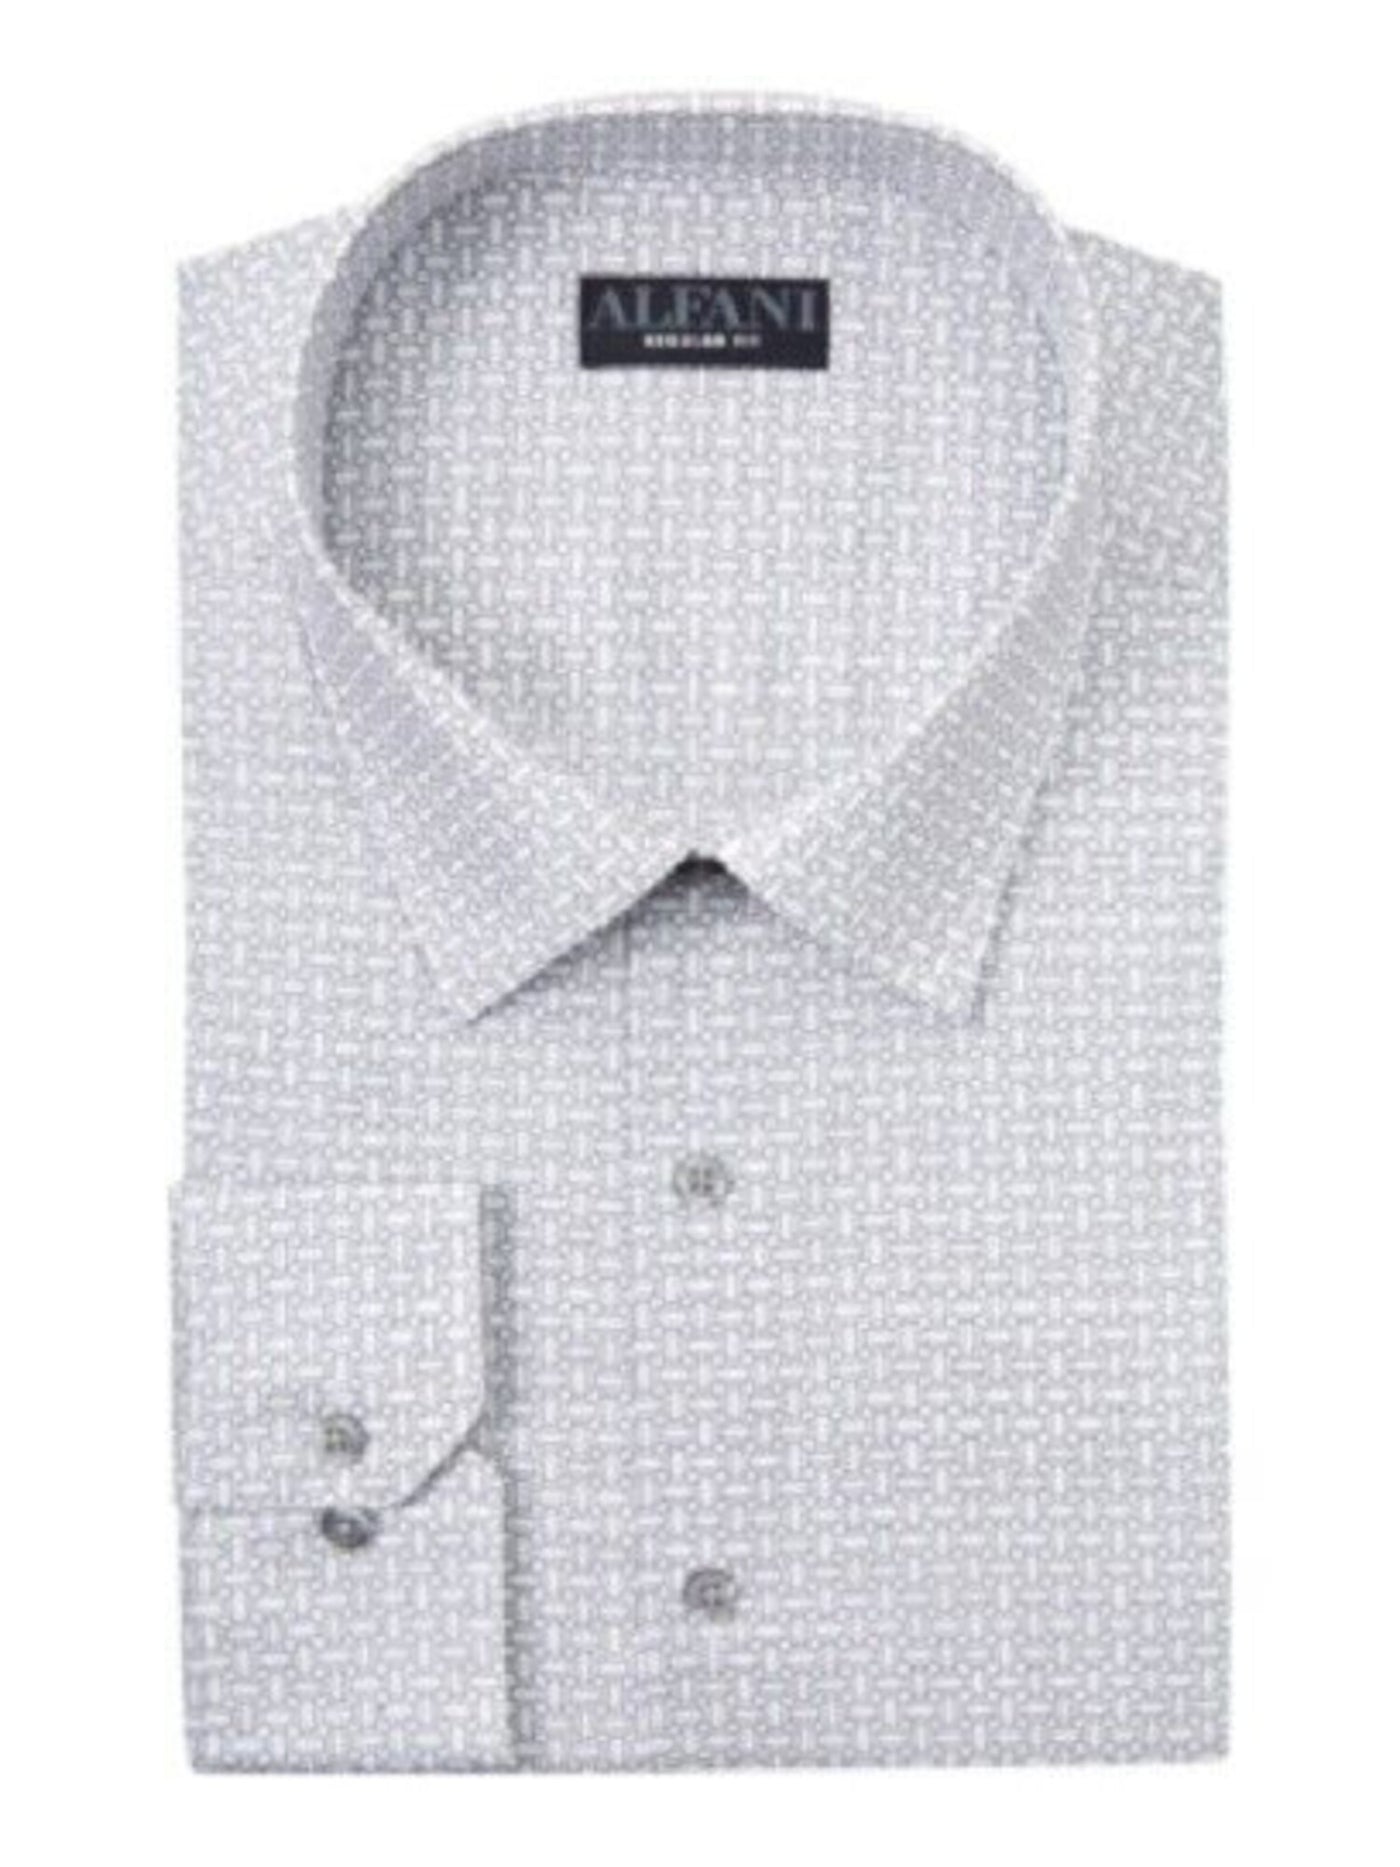 ALFANI Mens White Easy Care, Geometric Spread Collar Slim Fit Dress Shirt S 14/14.5- 32/33